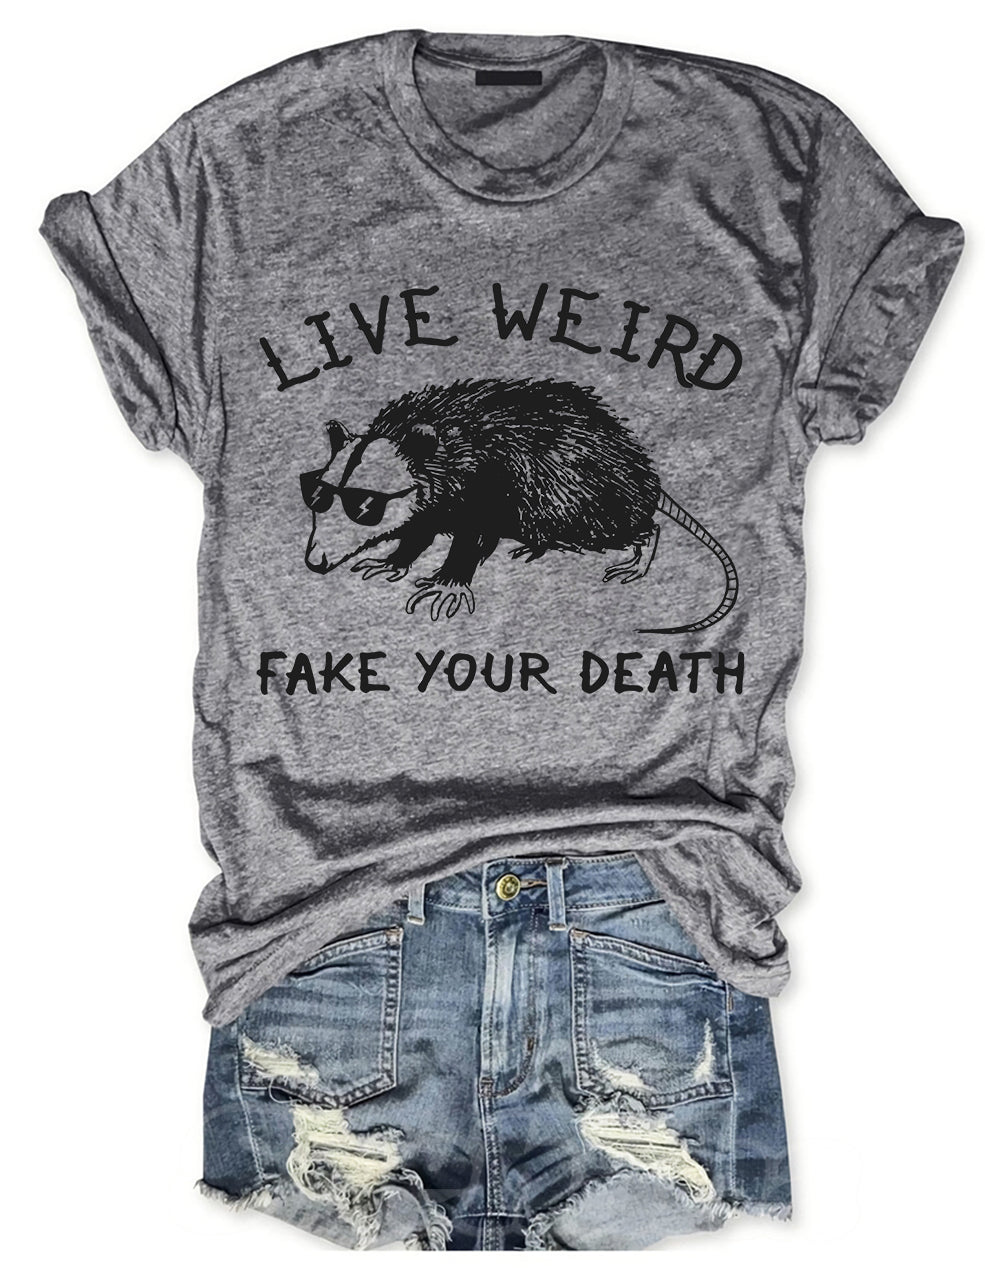 Live Weird Fake Your Death Cool T-shirt